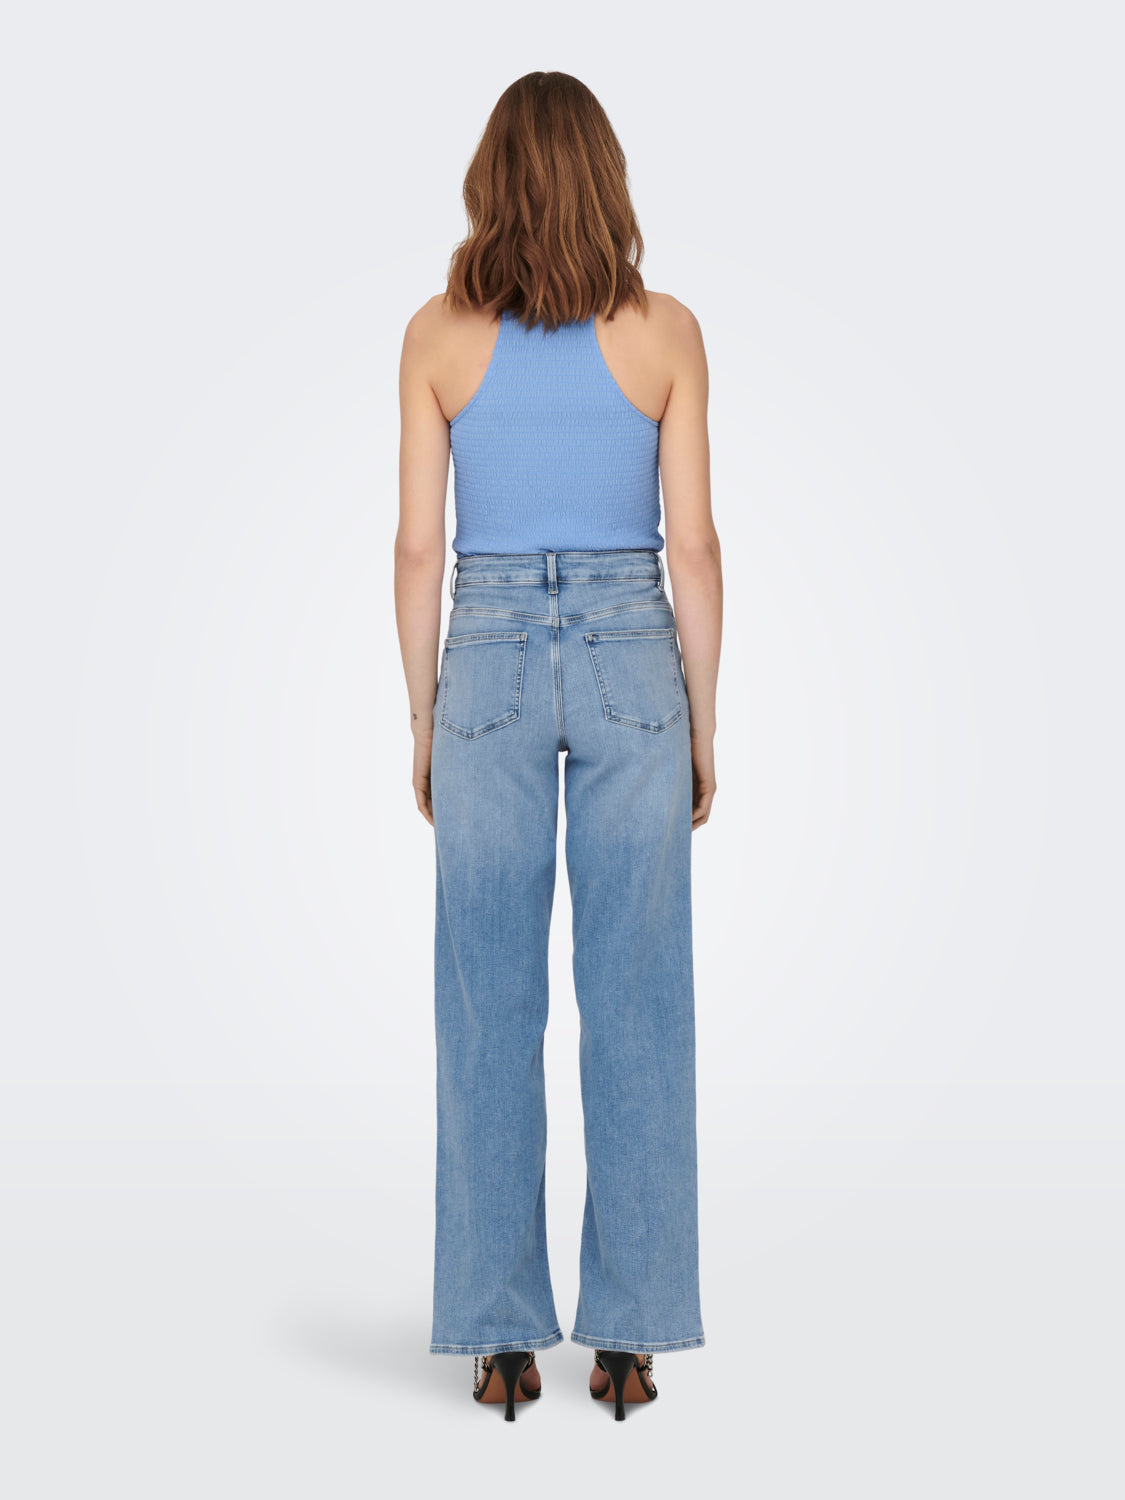 ONLMADISON Jeans - Light Blue Denim